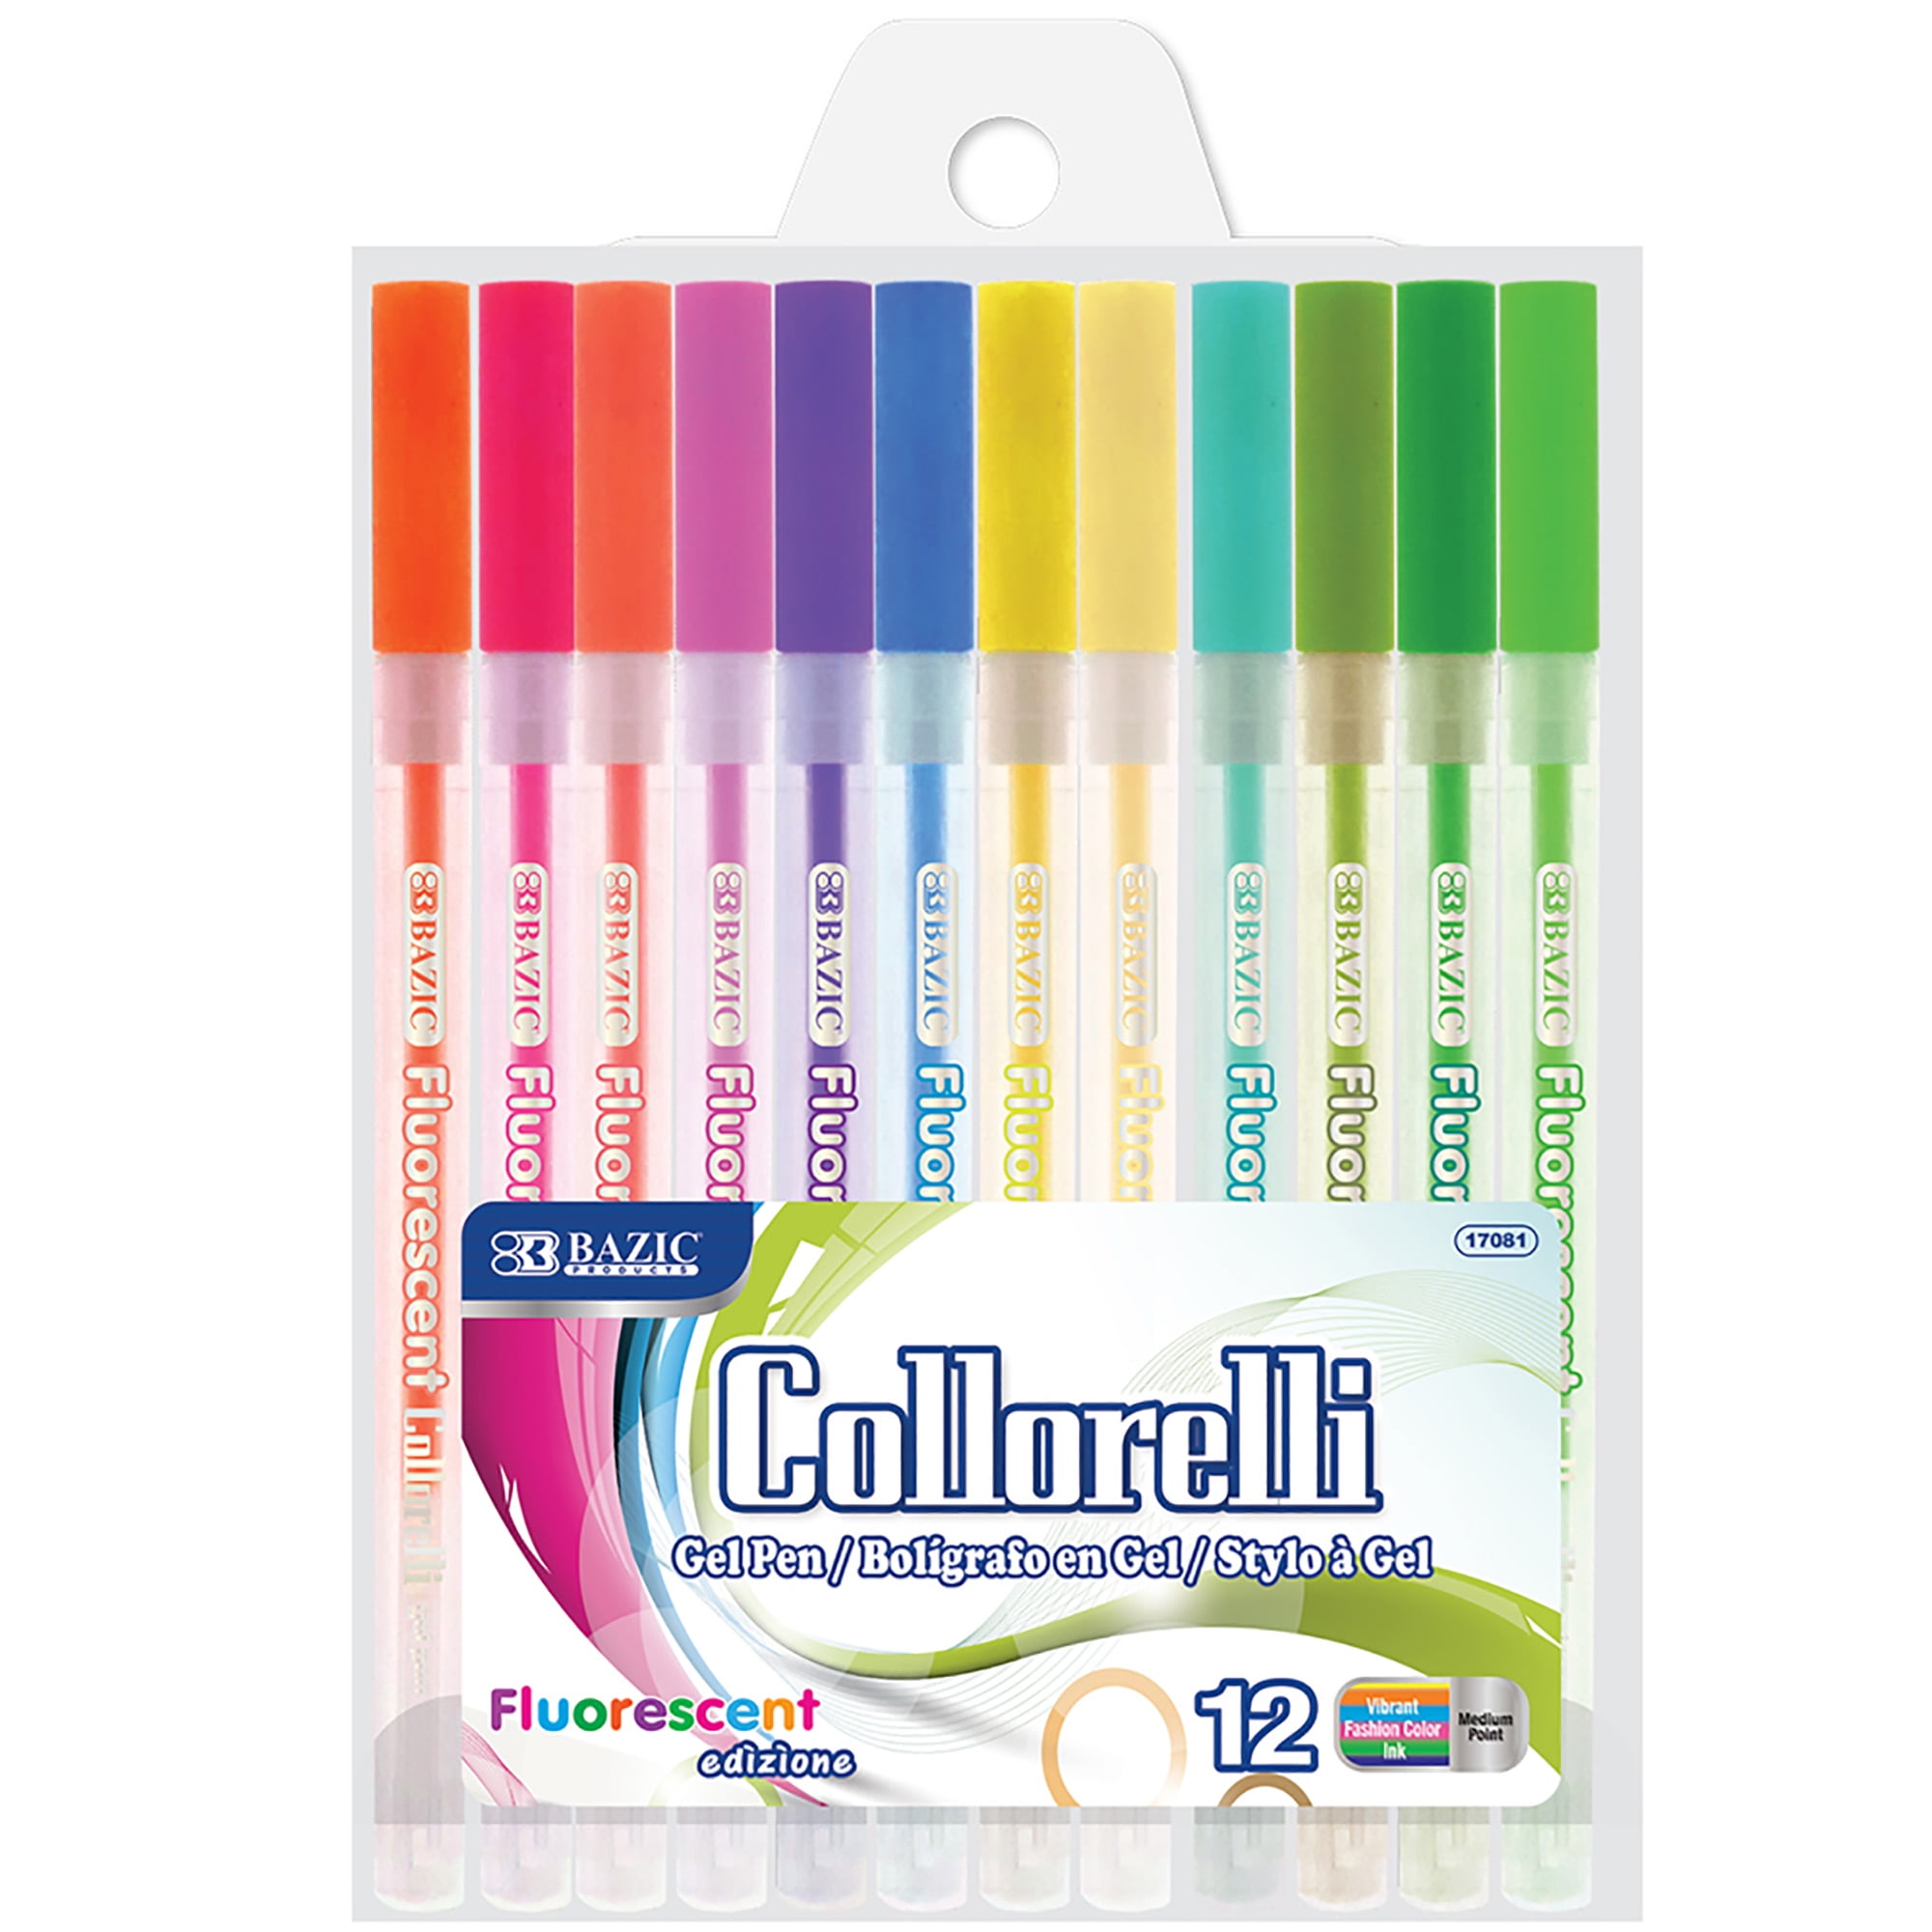 Picture of DDI 2289673 BAZIC Collorelli Gel Pens - 12 Count  Assorted Fluorescent Colors Case of 144